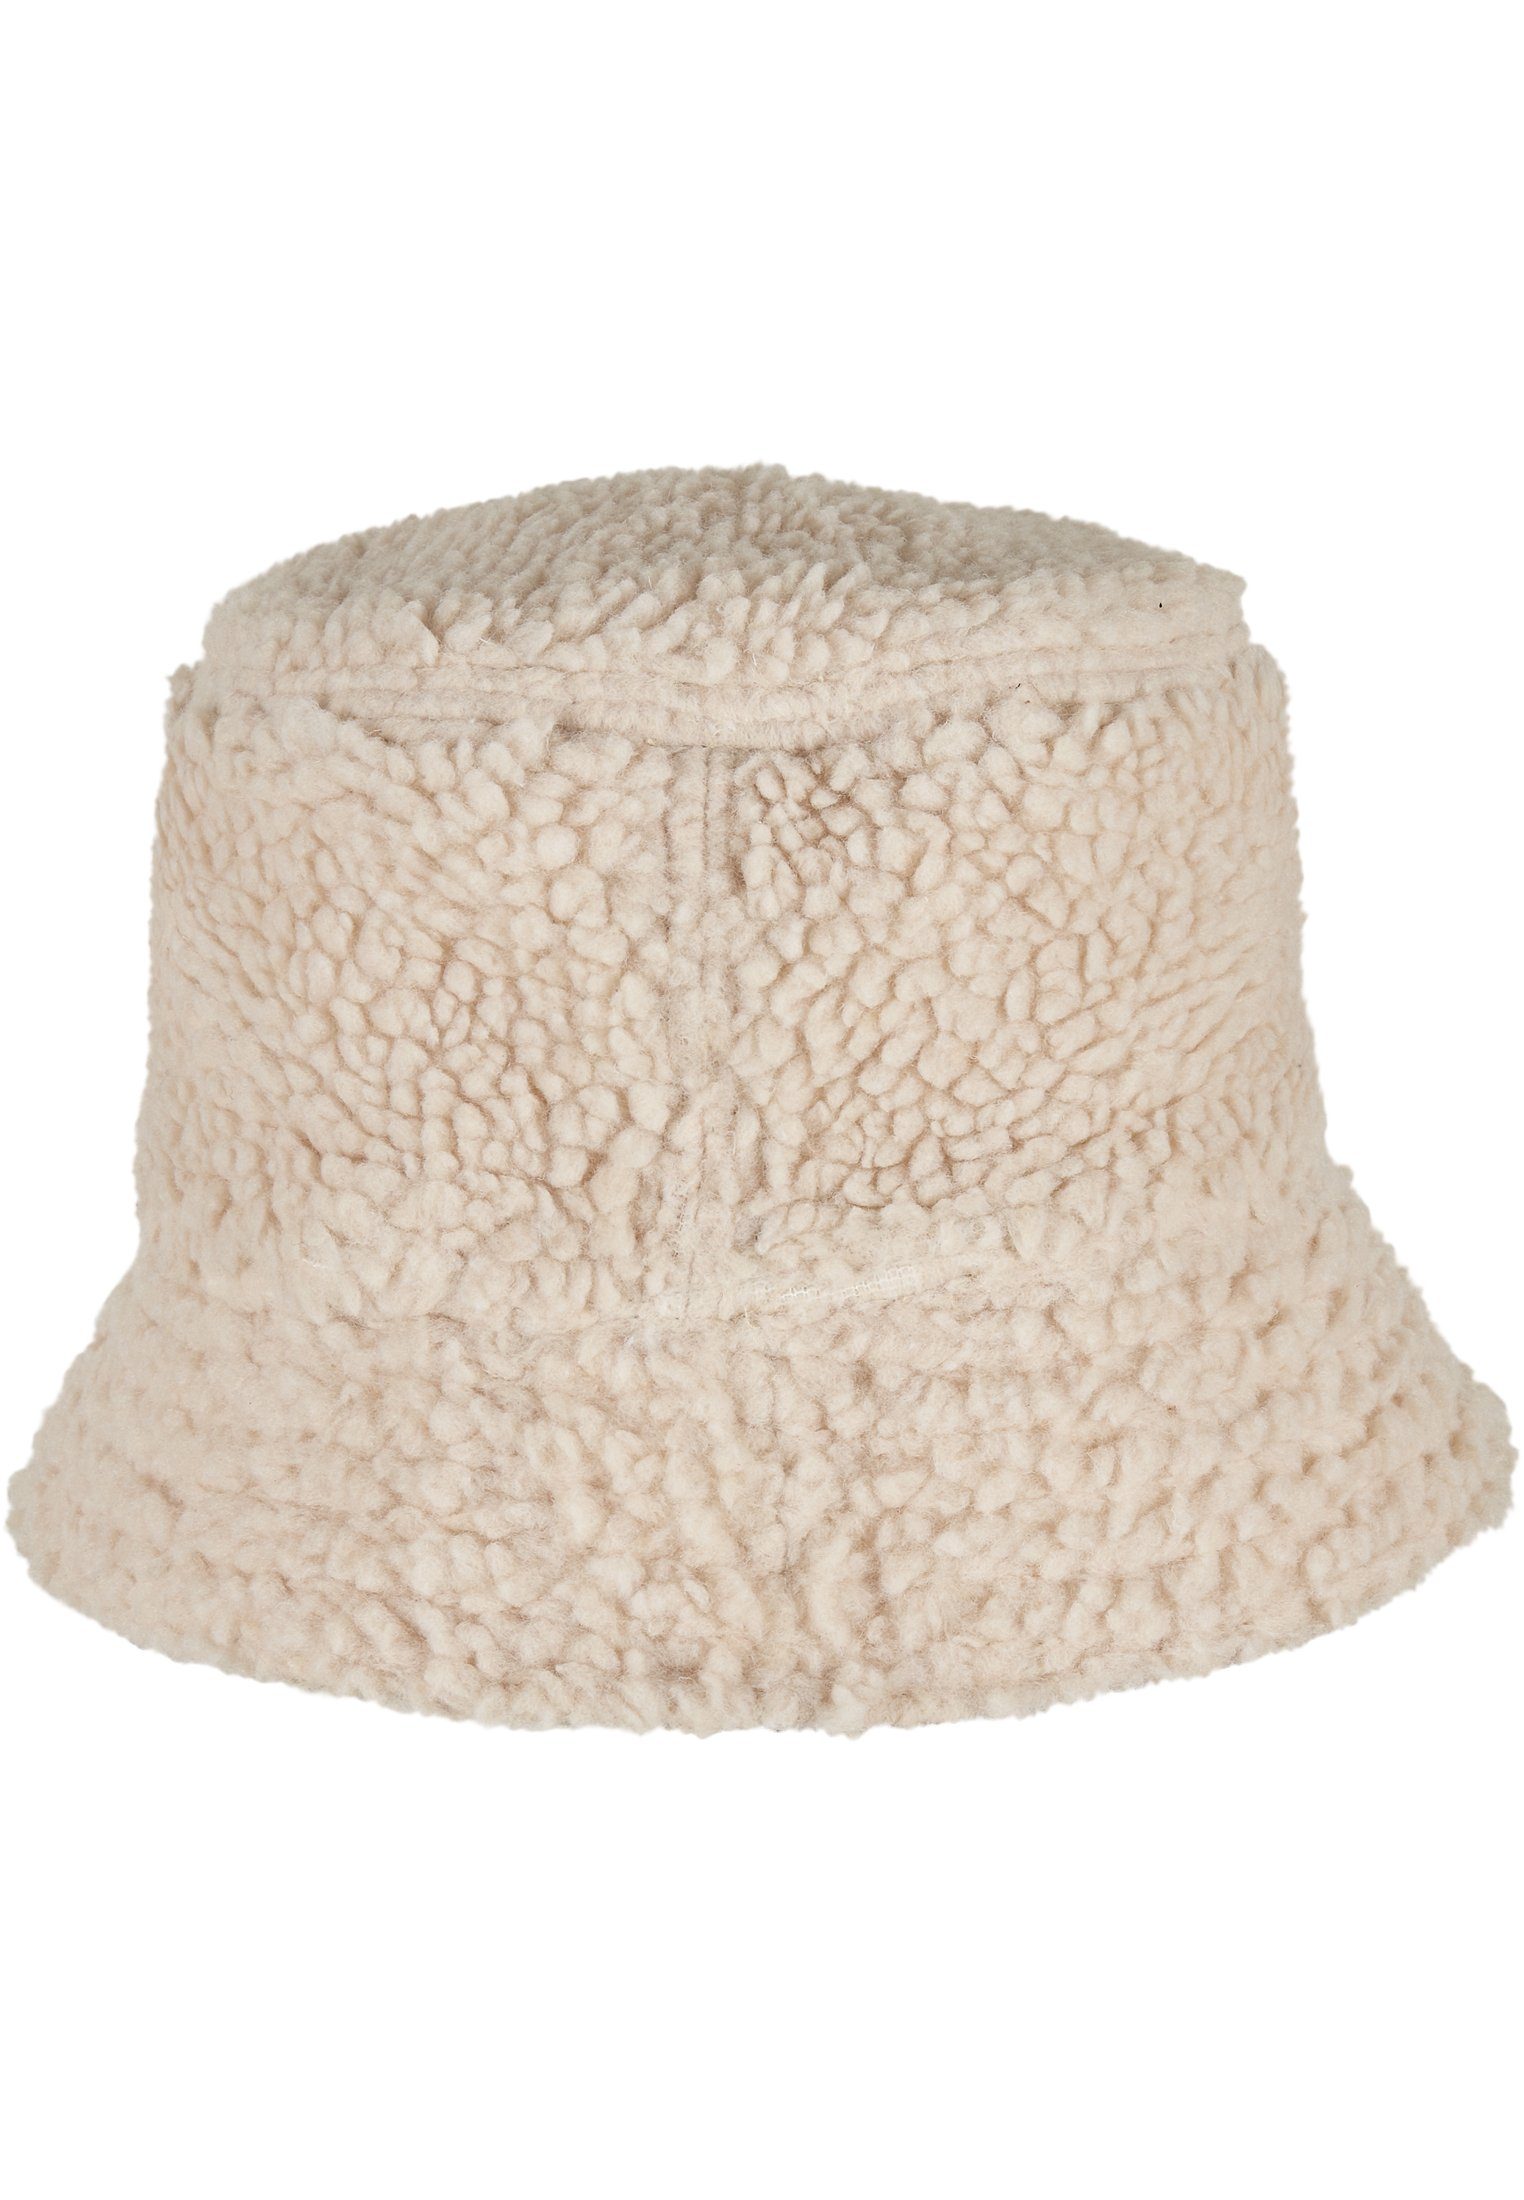 Sherpa Flex Camo Hat Bucket Flexfit Tree Cap Bucket Real Reversible Hat